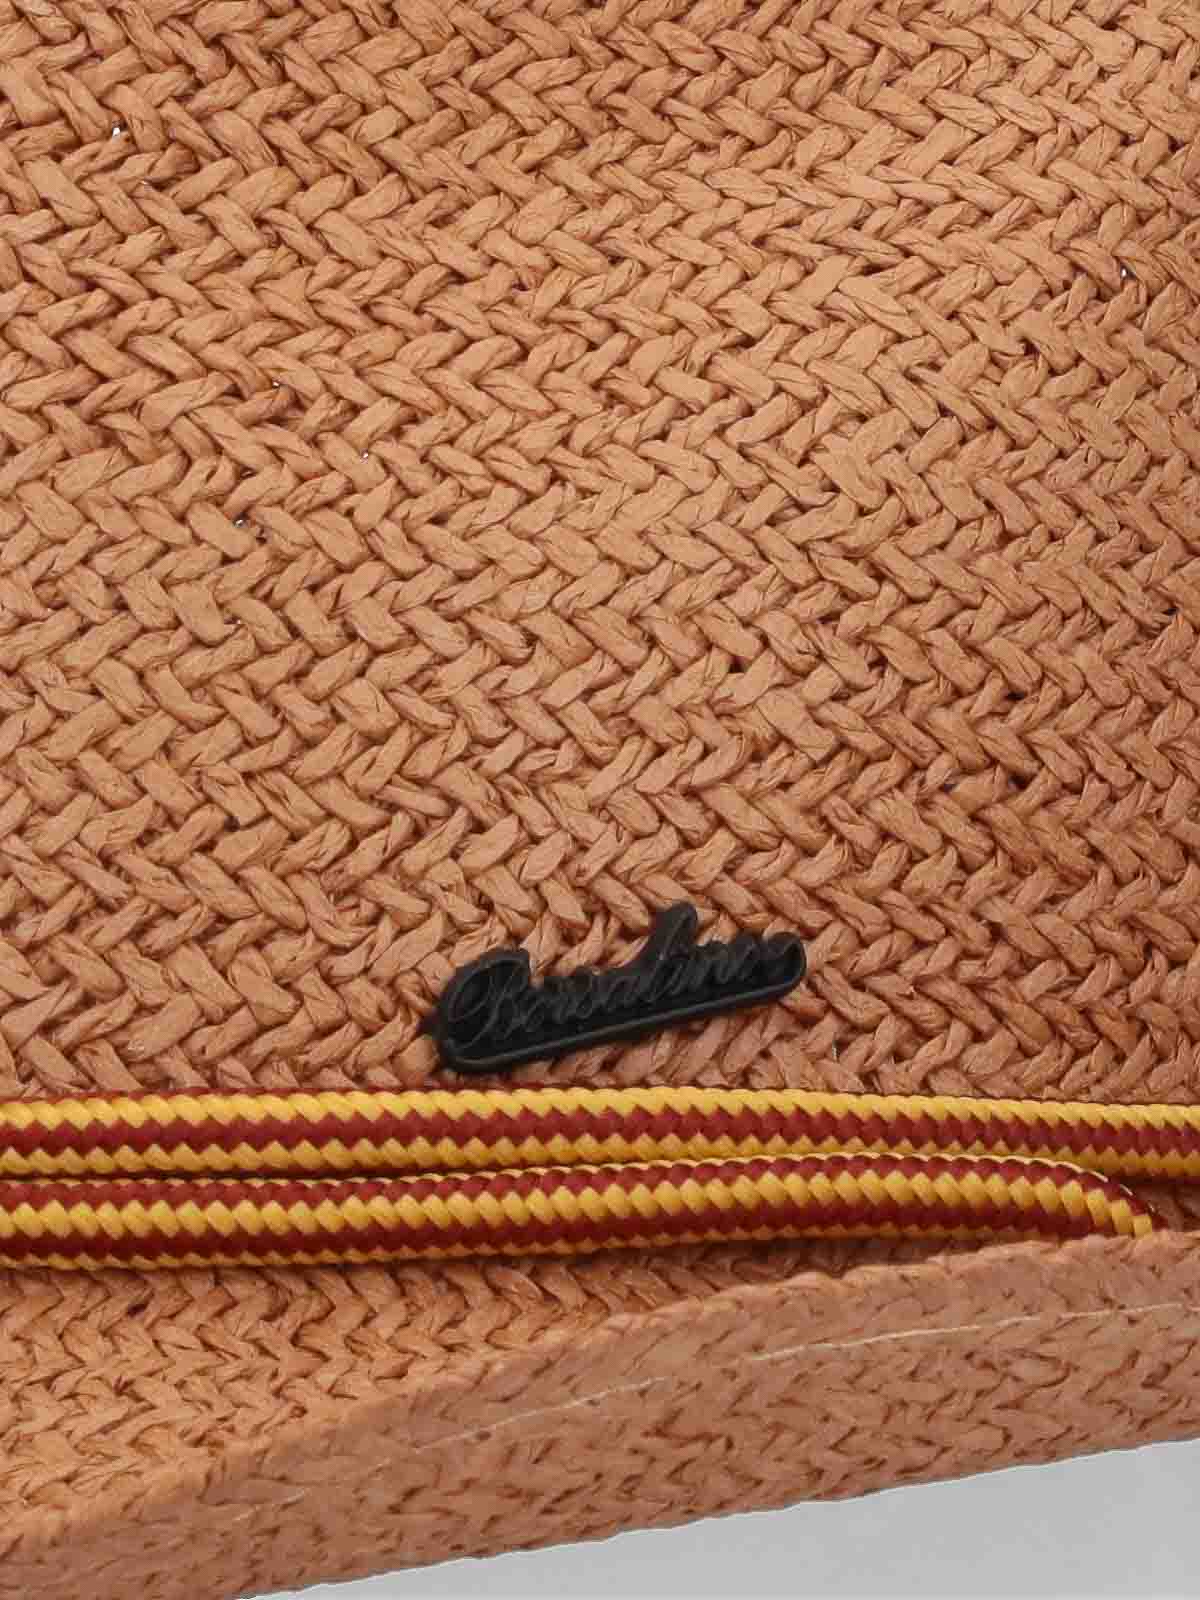 Shop Borsalino Panama Hat In Brown